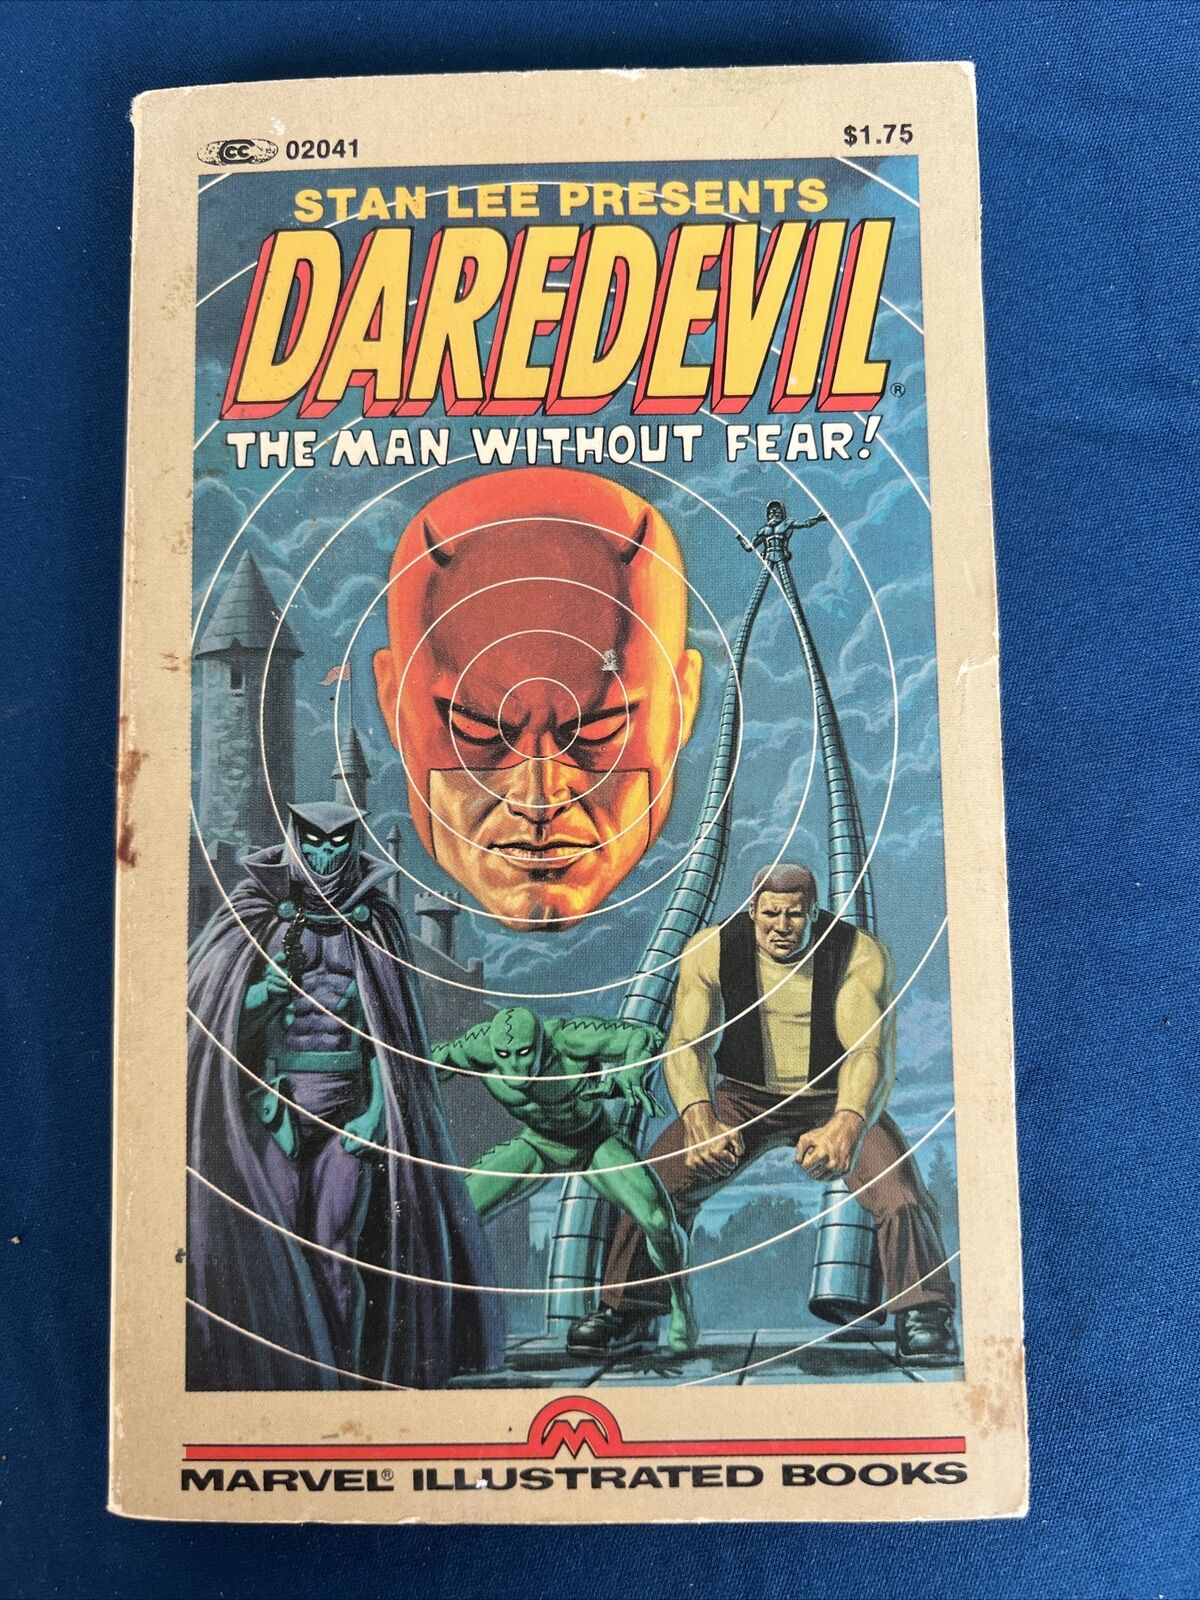 DAREDEVIL Marvel Illustrated Books Paperback (1982) -- Stan Lee RARE 1st Edition